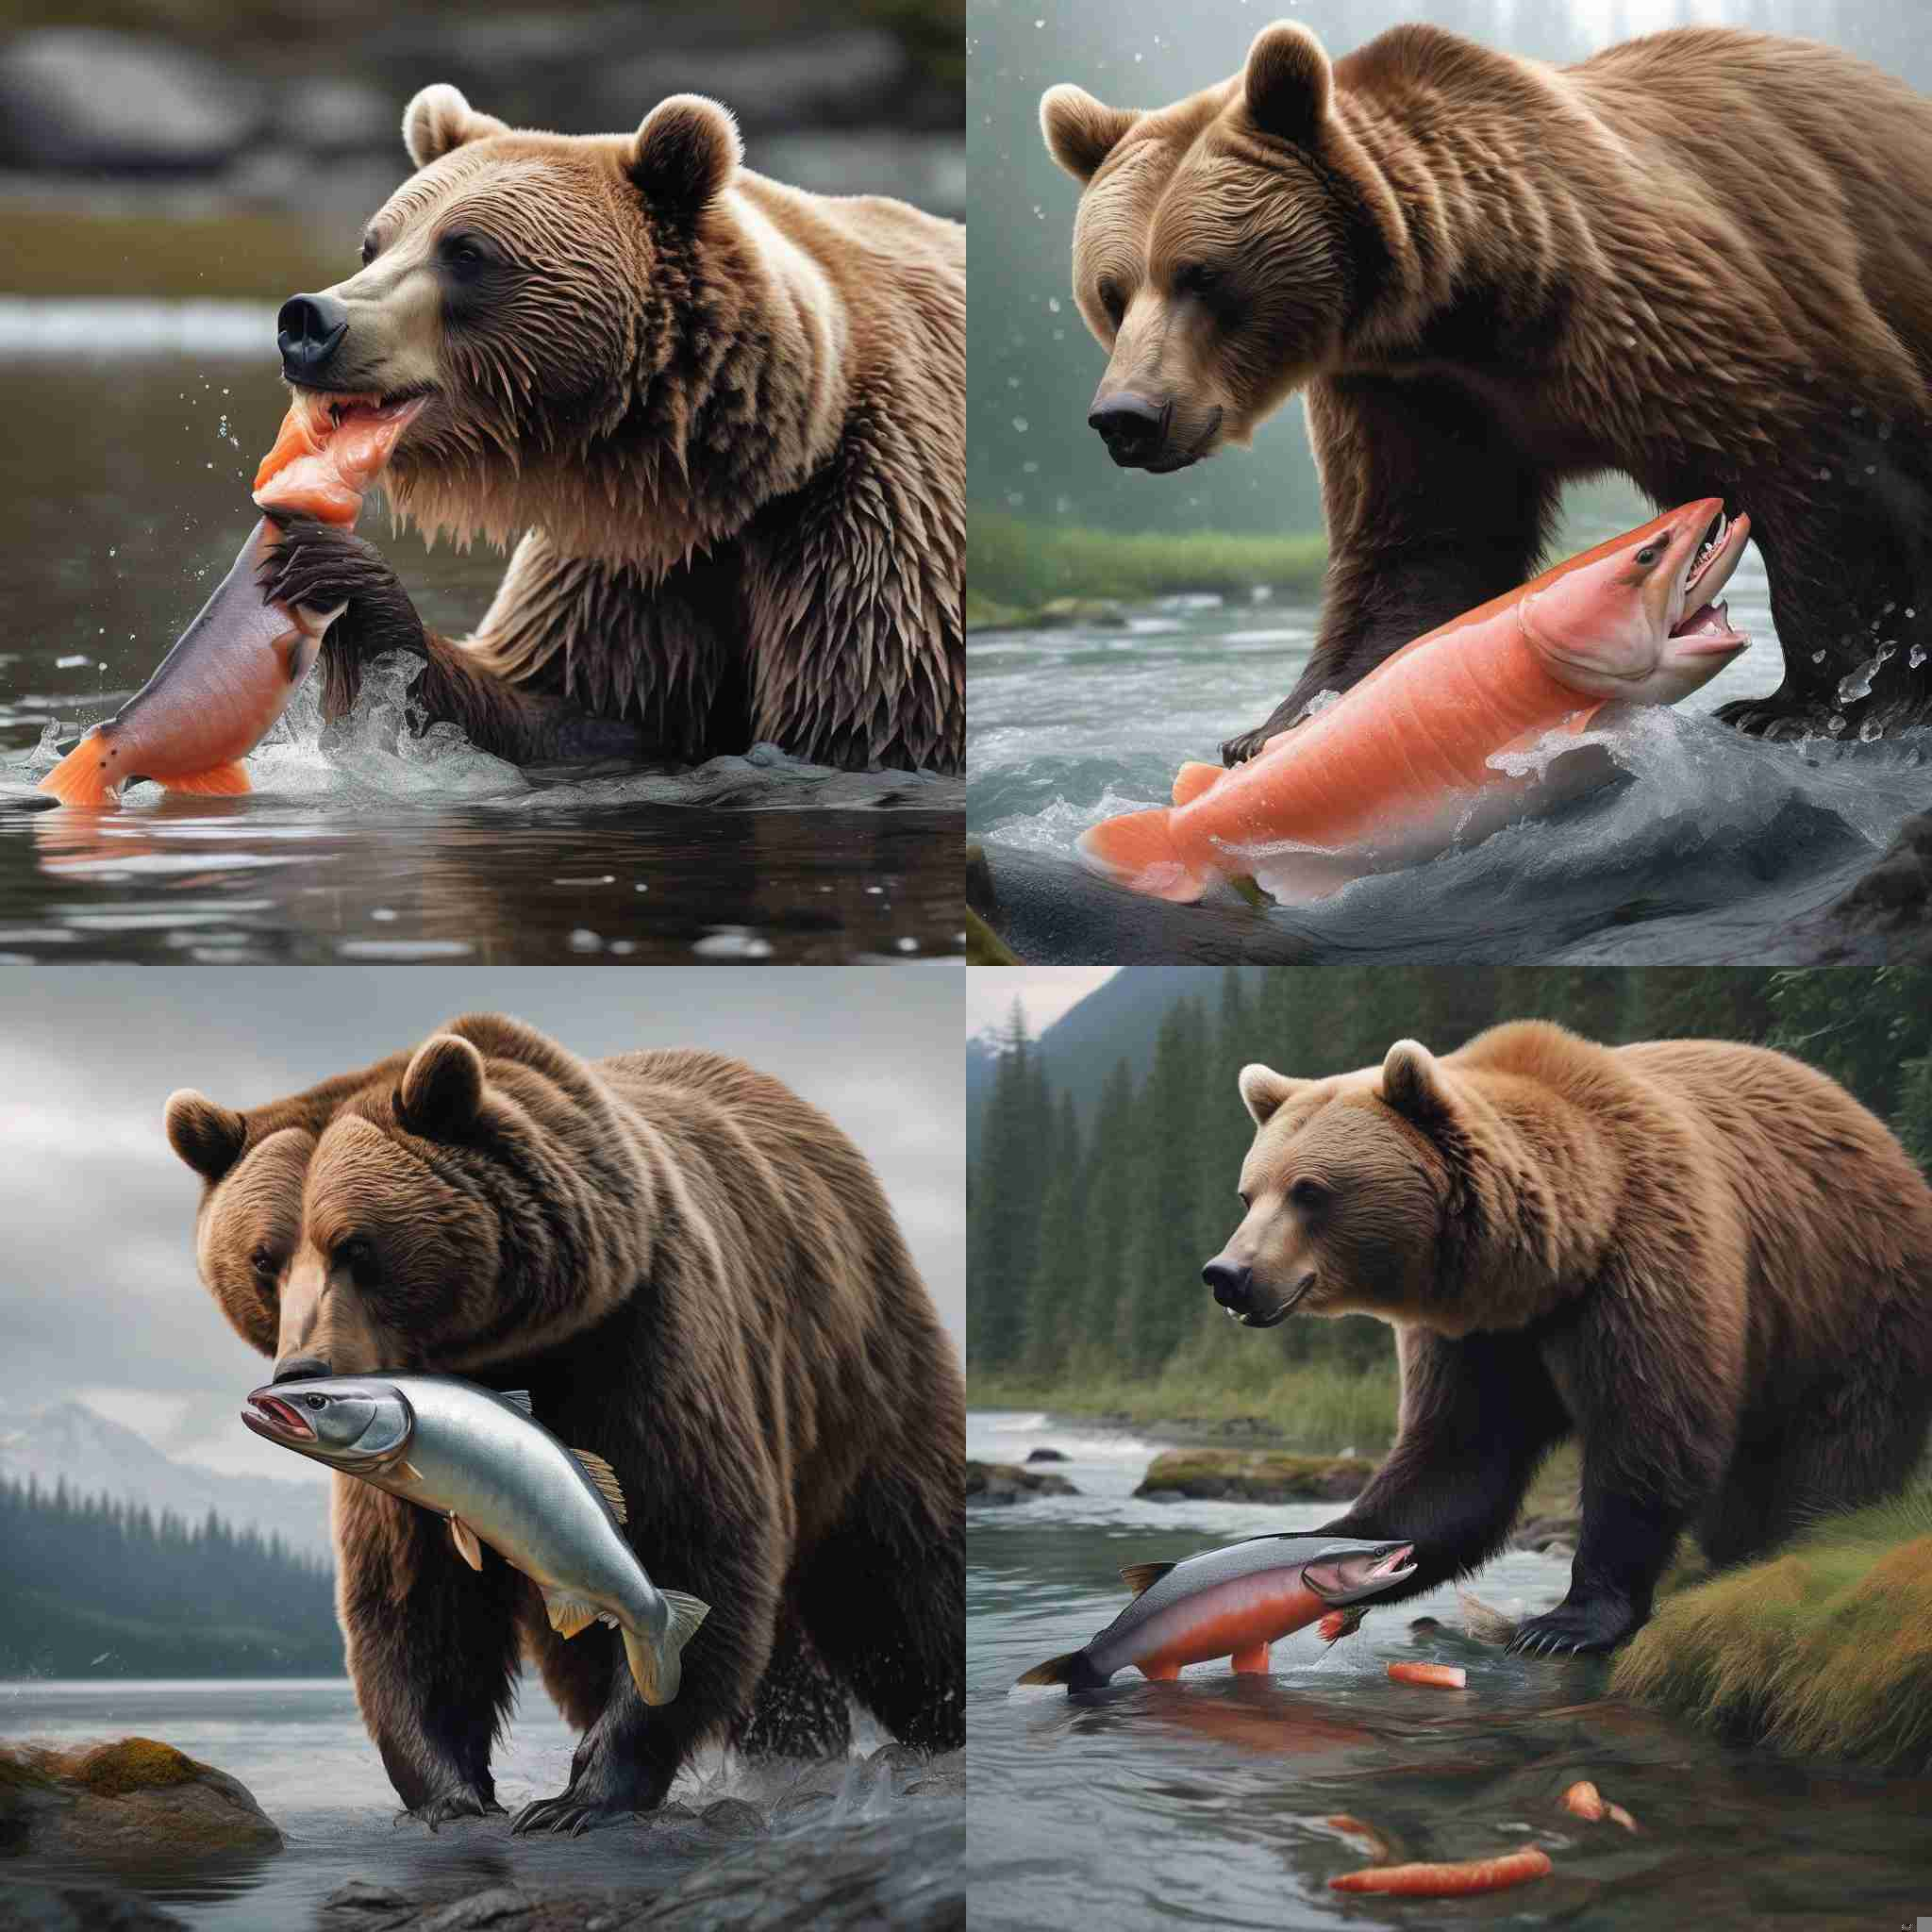 A bear eating salmon